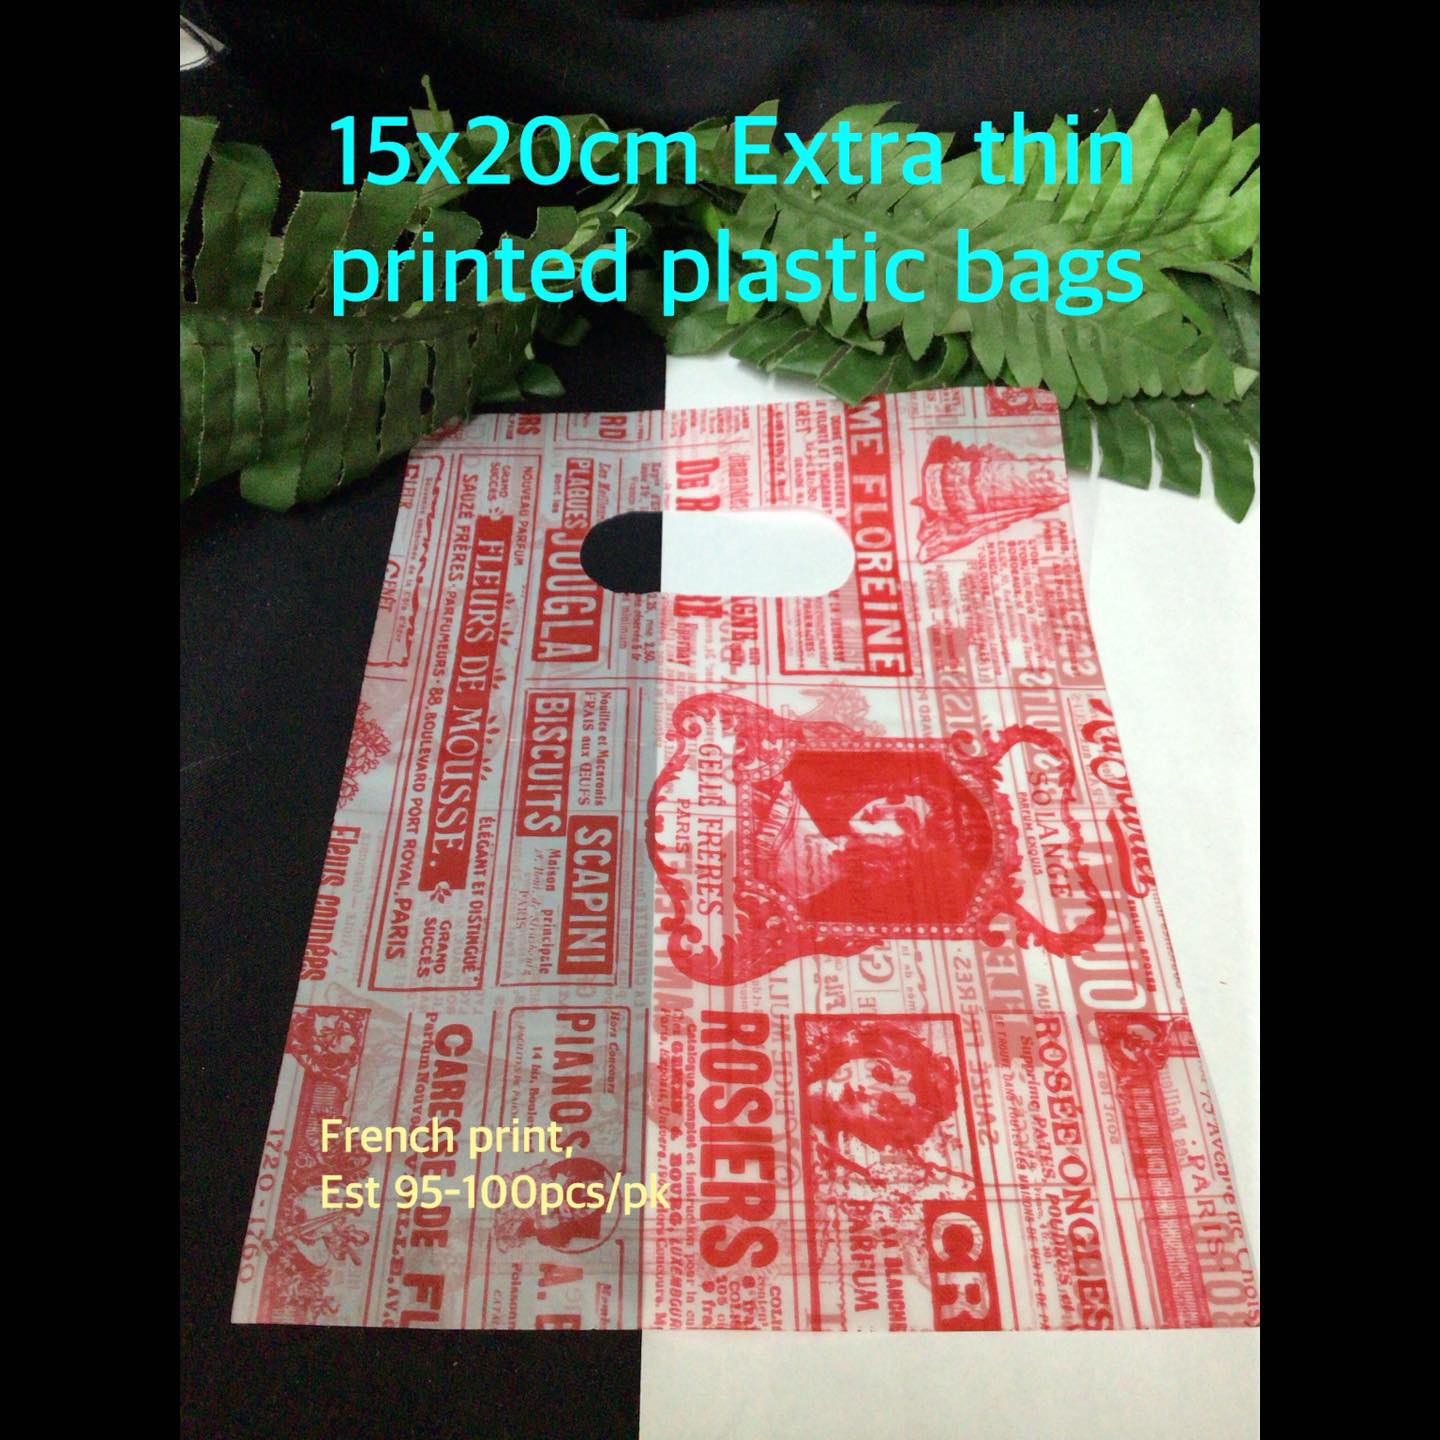 Top Printed Polythene Bag Manufacturers in Delhi - प्रिंटेड पॉलिथीन बैग  मनुफक्चरर्स, दिल्ली - Best Poly Bags Manufacturers - Justdial